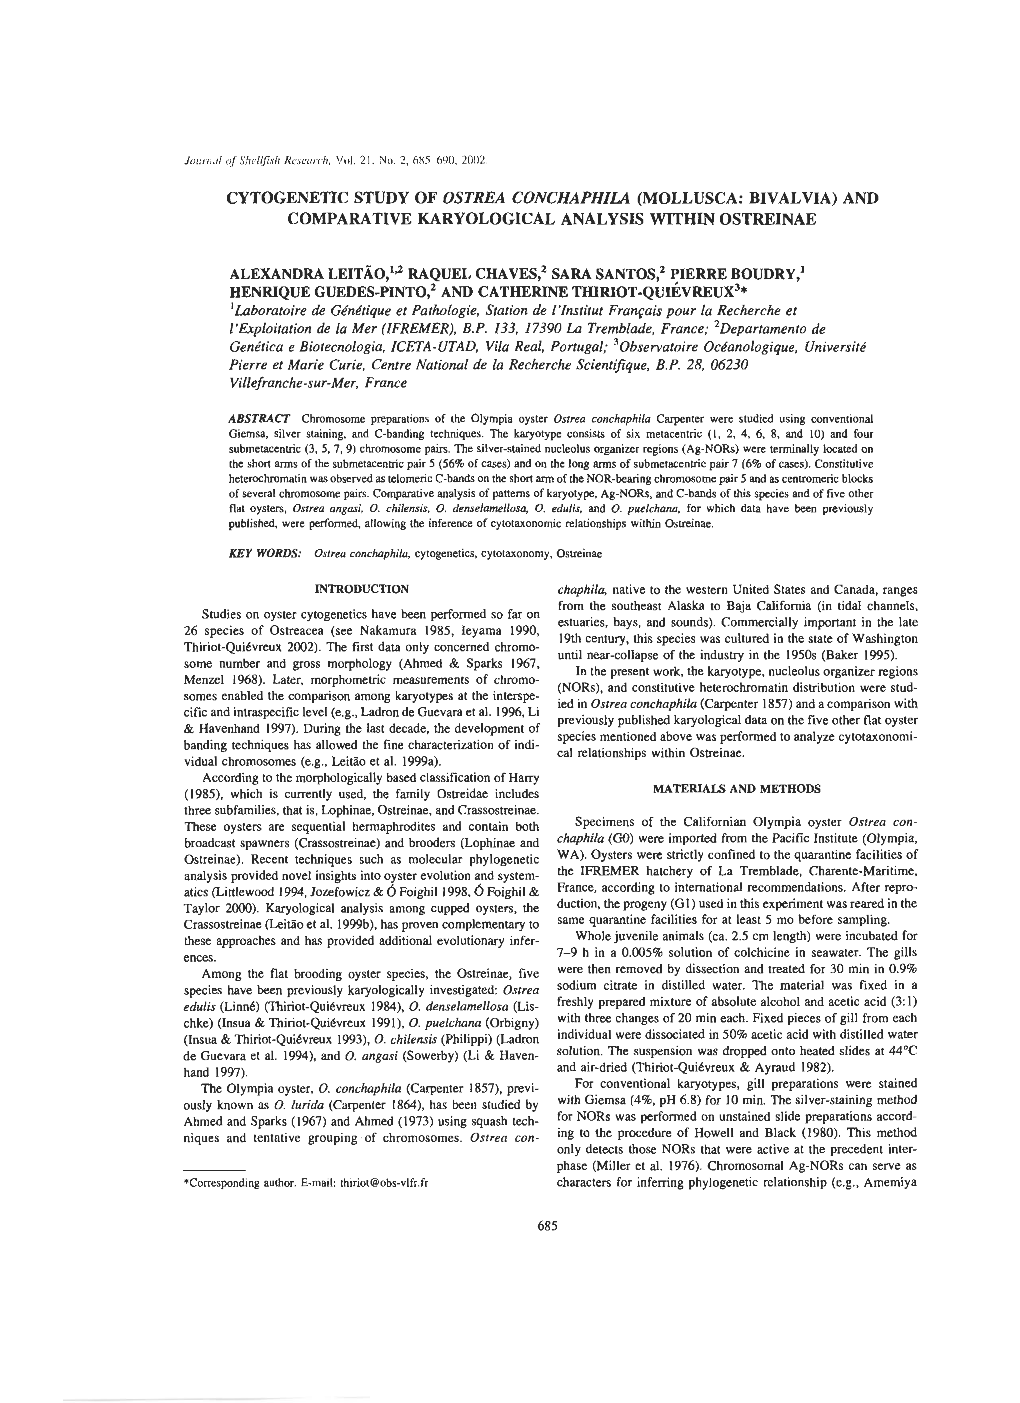 Cytogenetic Study of Ostrea Conchaphila (Mollusca : Bivalvia